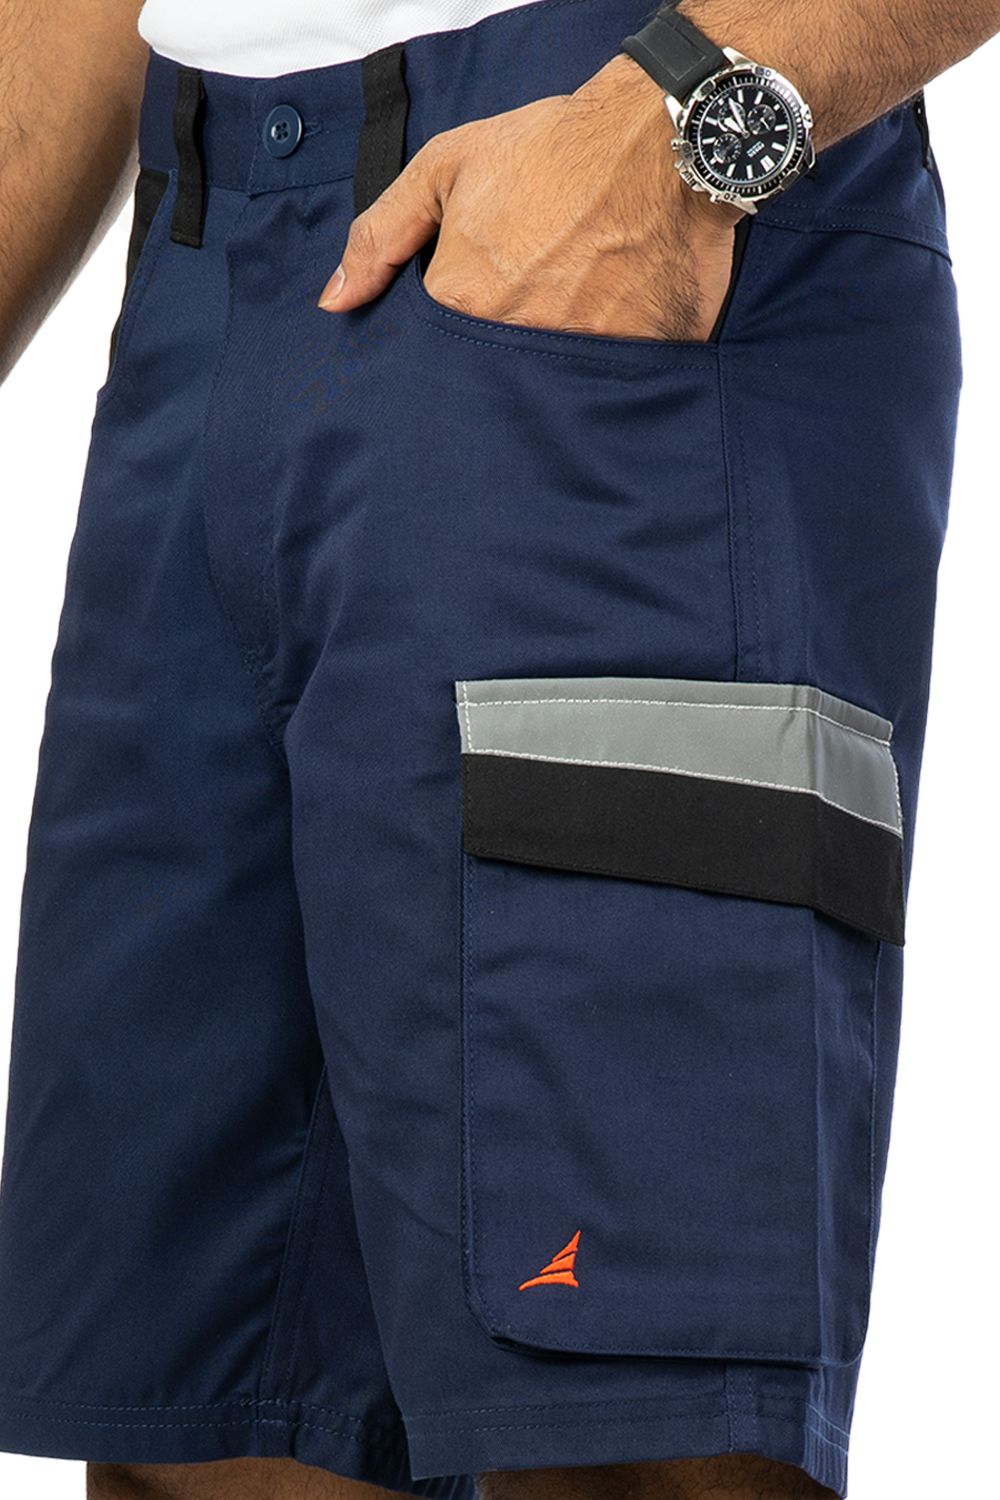 industrial design ergonomic navy-black shorts